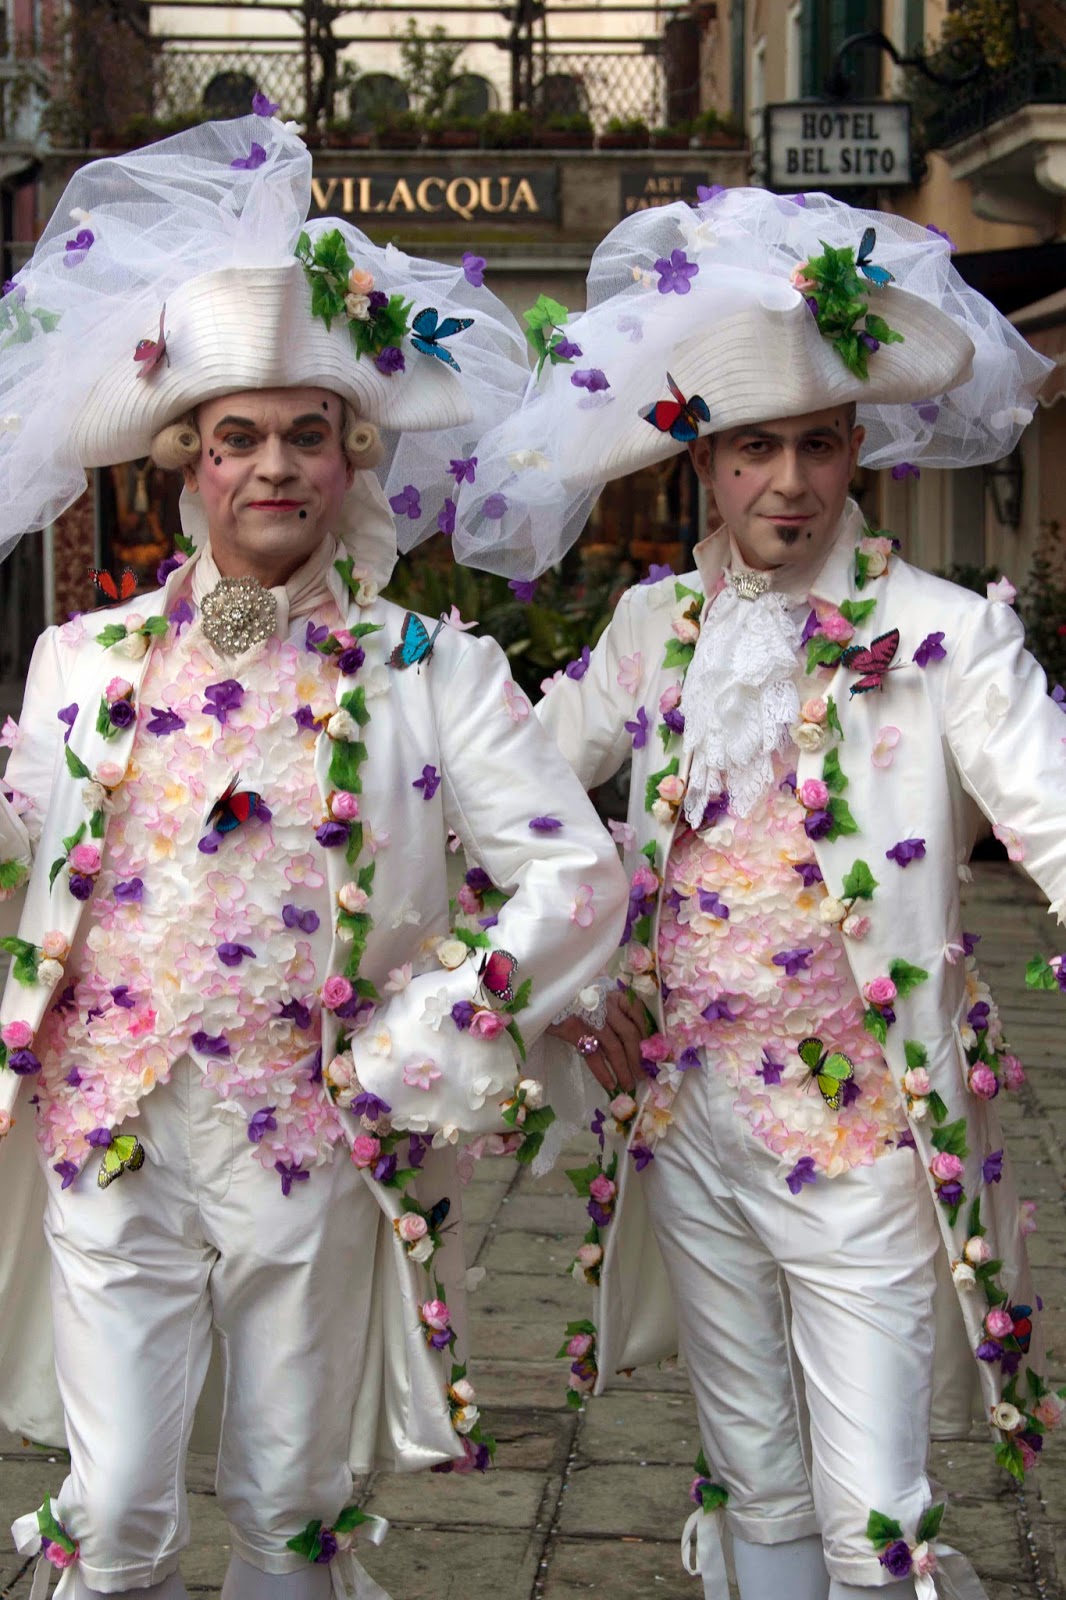 Carnival in Venice: dressed up dandies